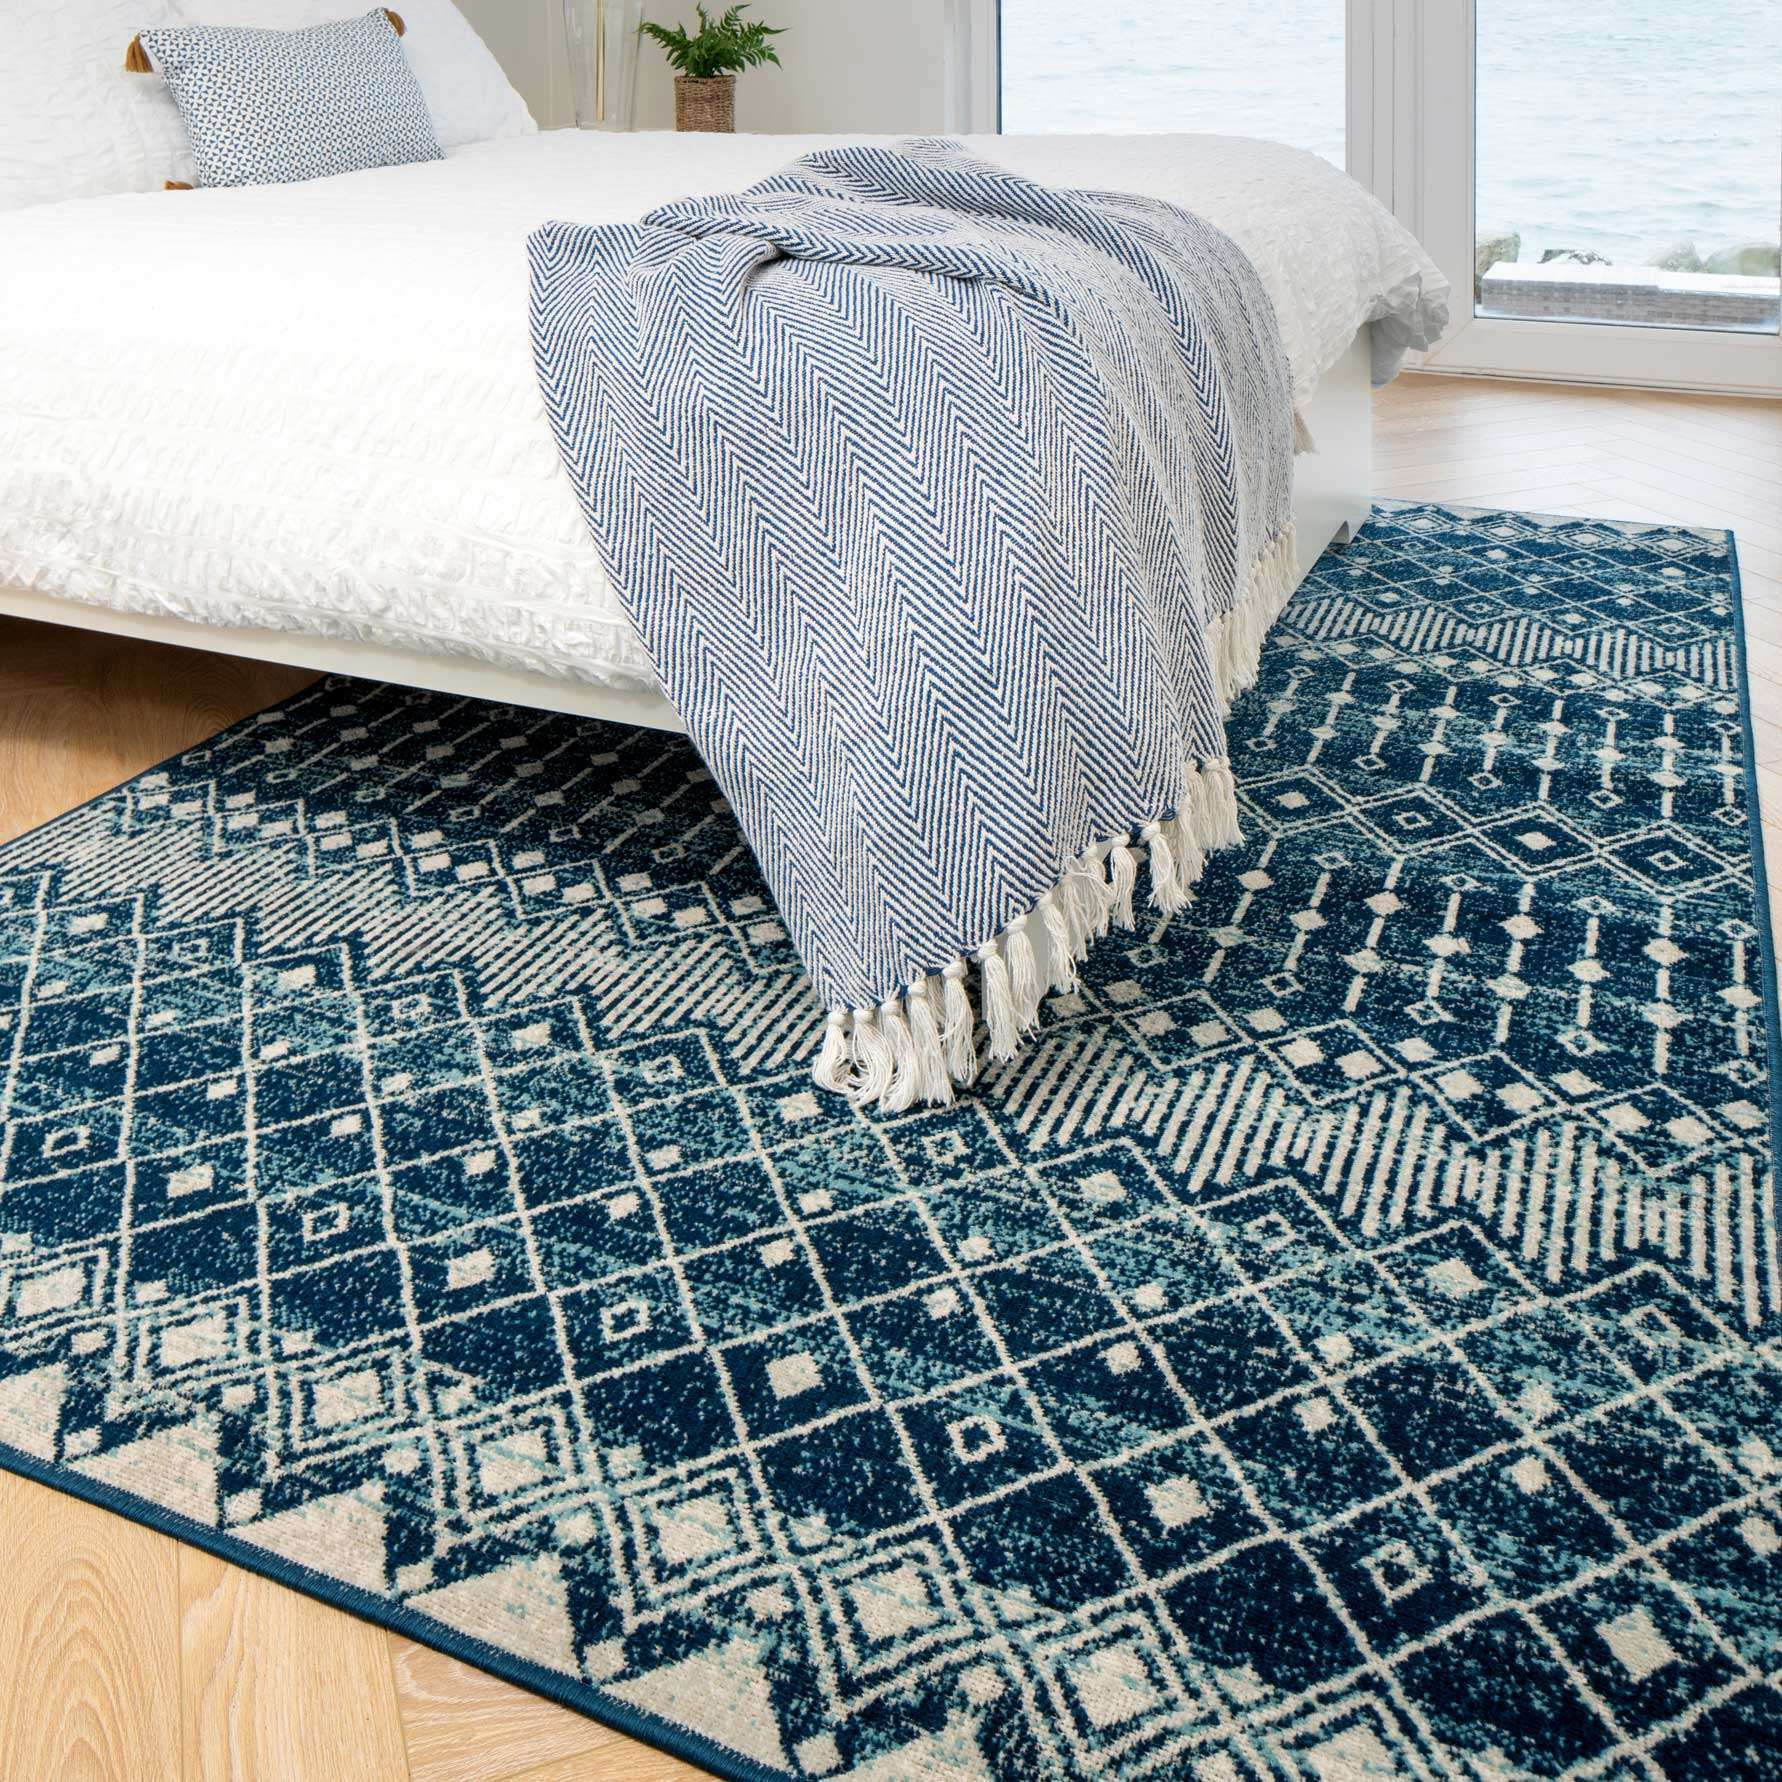 Blue Moroccan Tile Living Room Rug - Moda